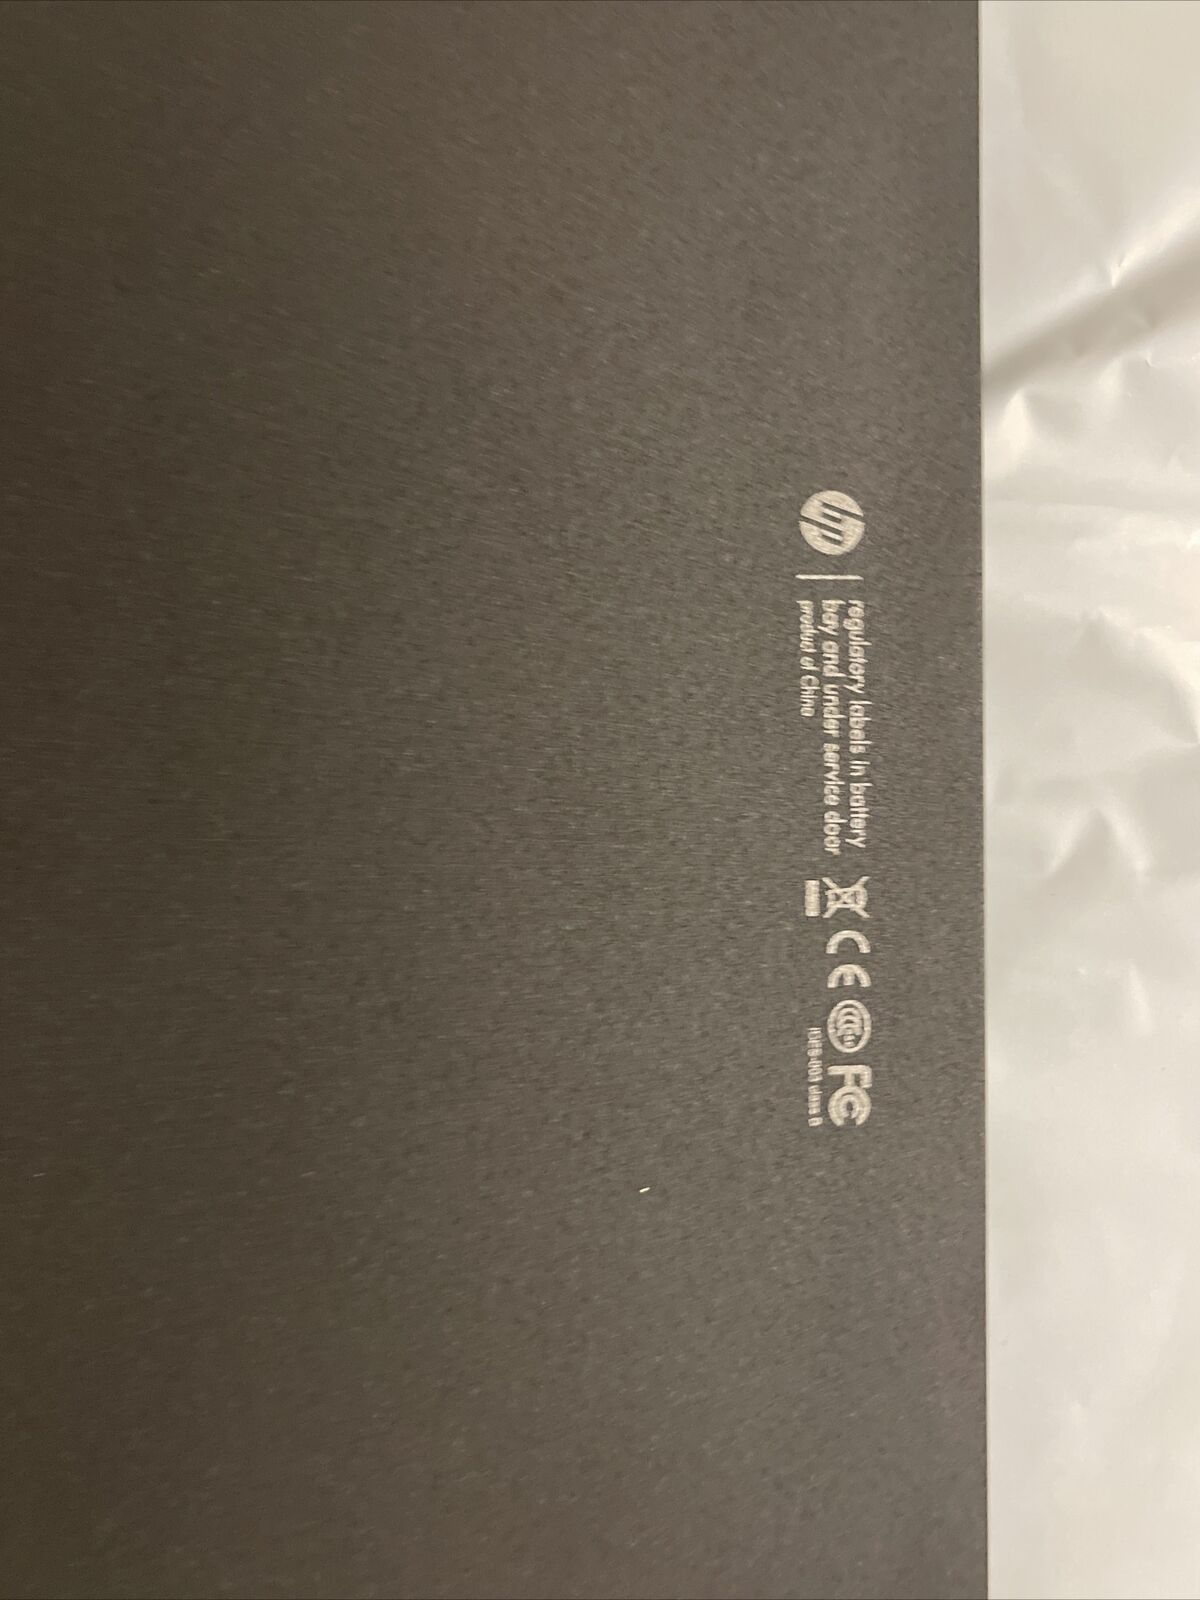 New HP ProBook 4440s 4441s 4445s 4446s Series Bottom Cover  690979-001 ata D4